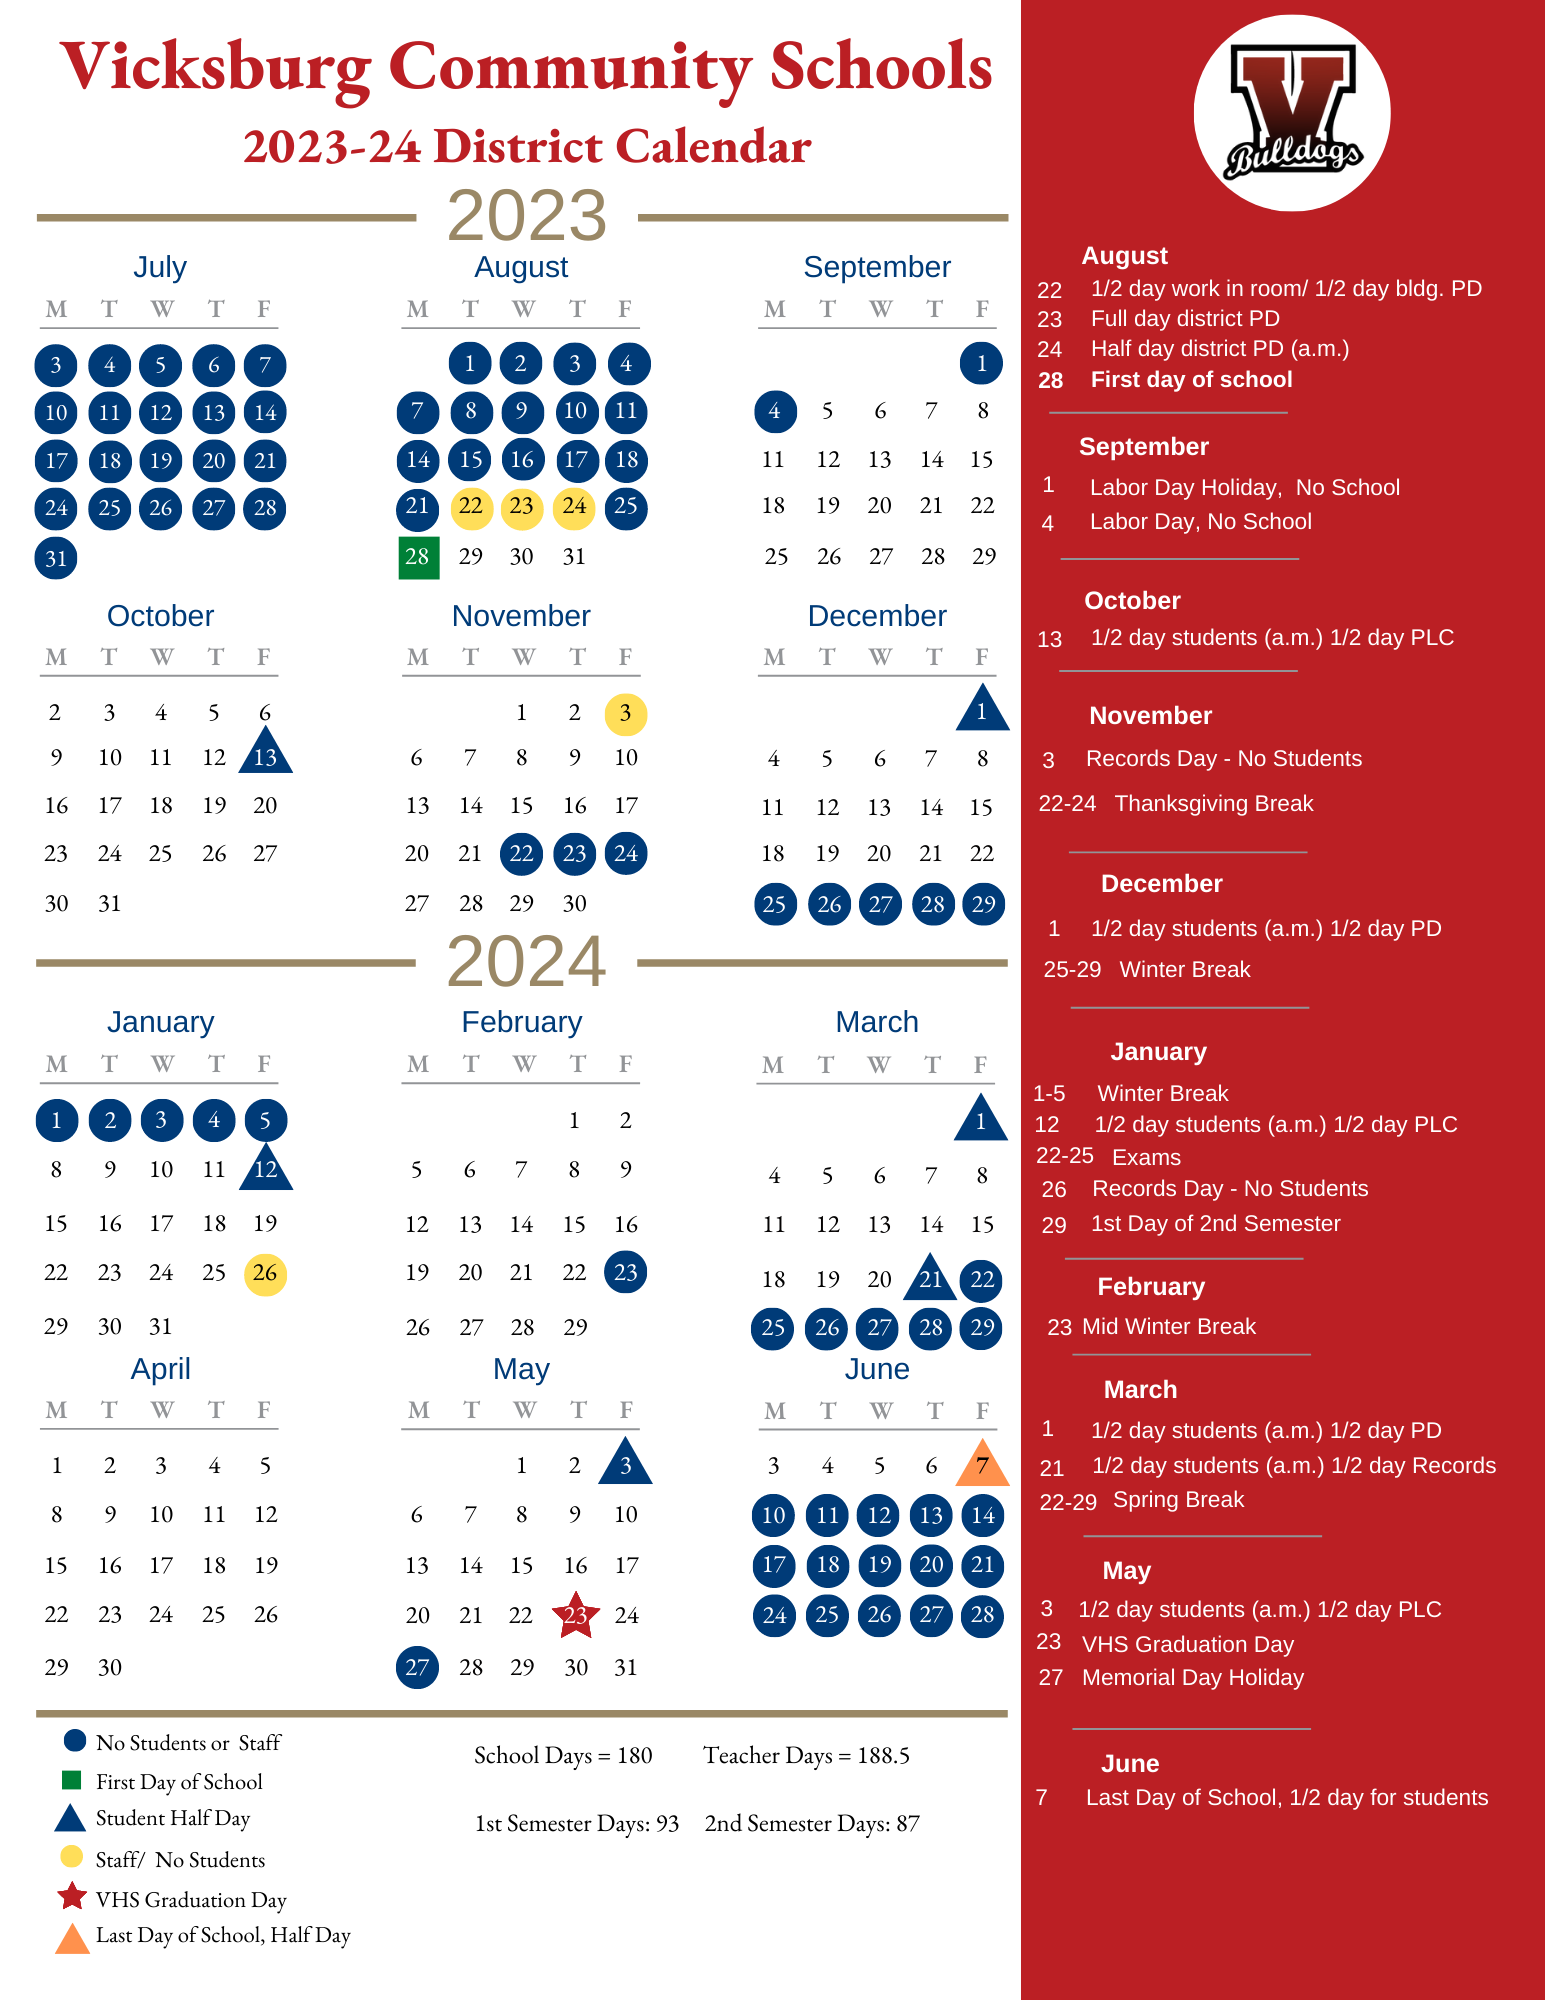 2023-24 District Calendar